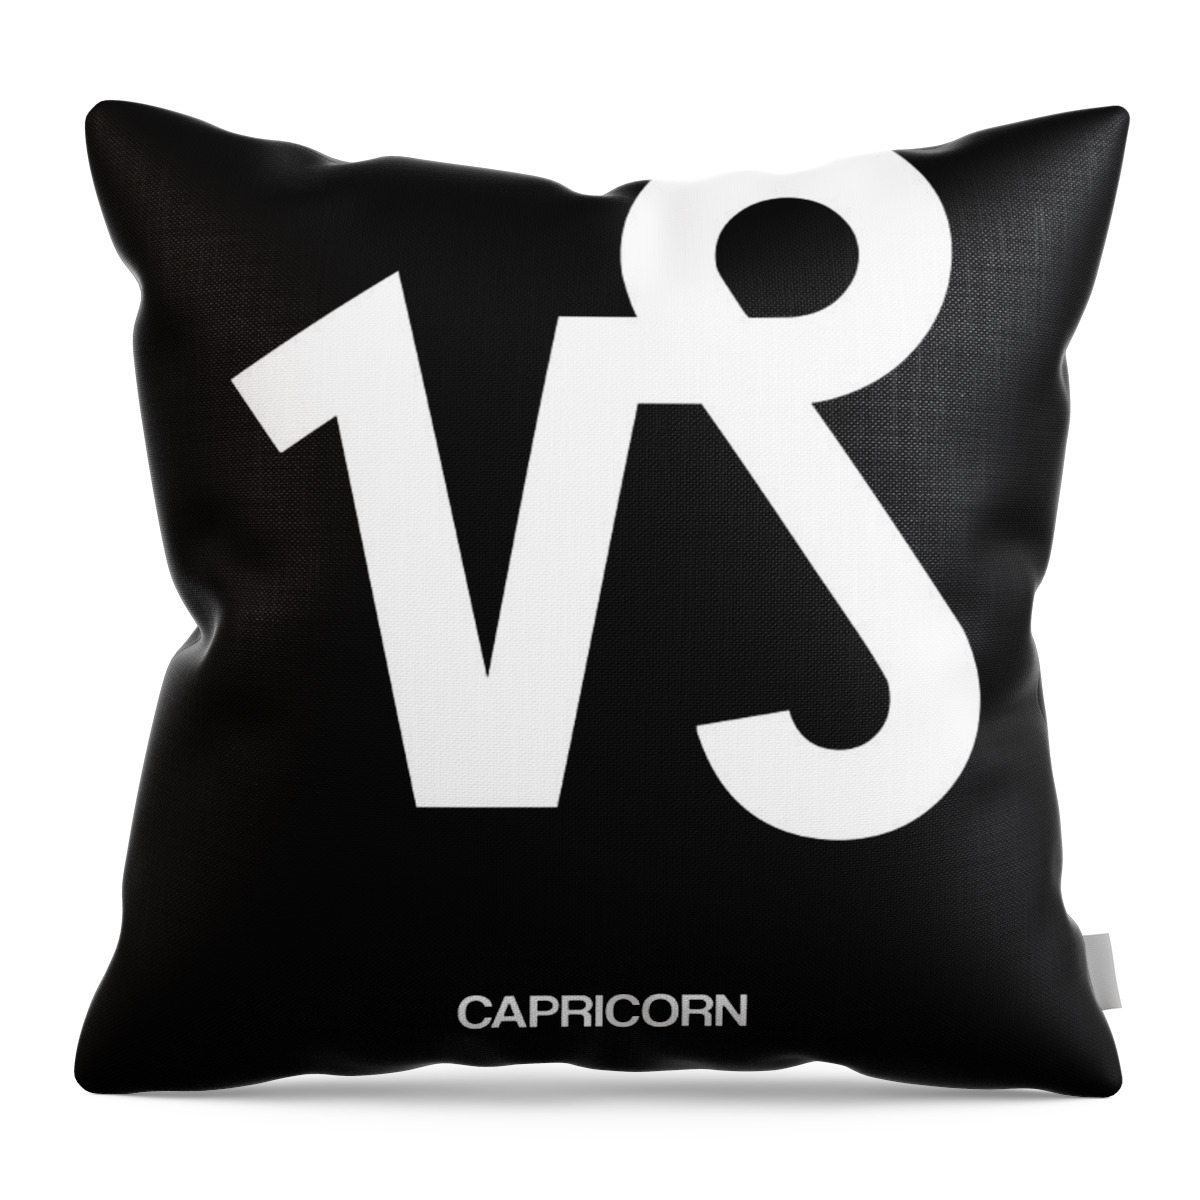 Capricorn Throw Pillow featuring the digital art Capricorn Zodiac Sign White by Naxart Studio